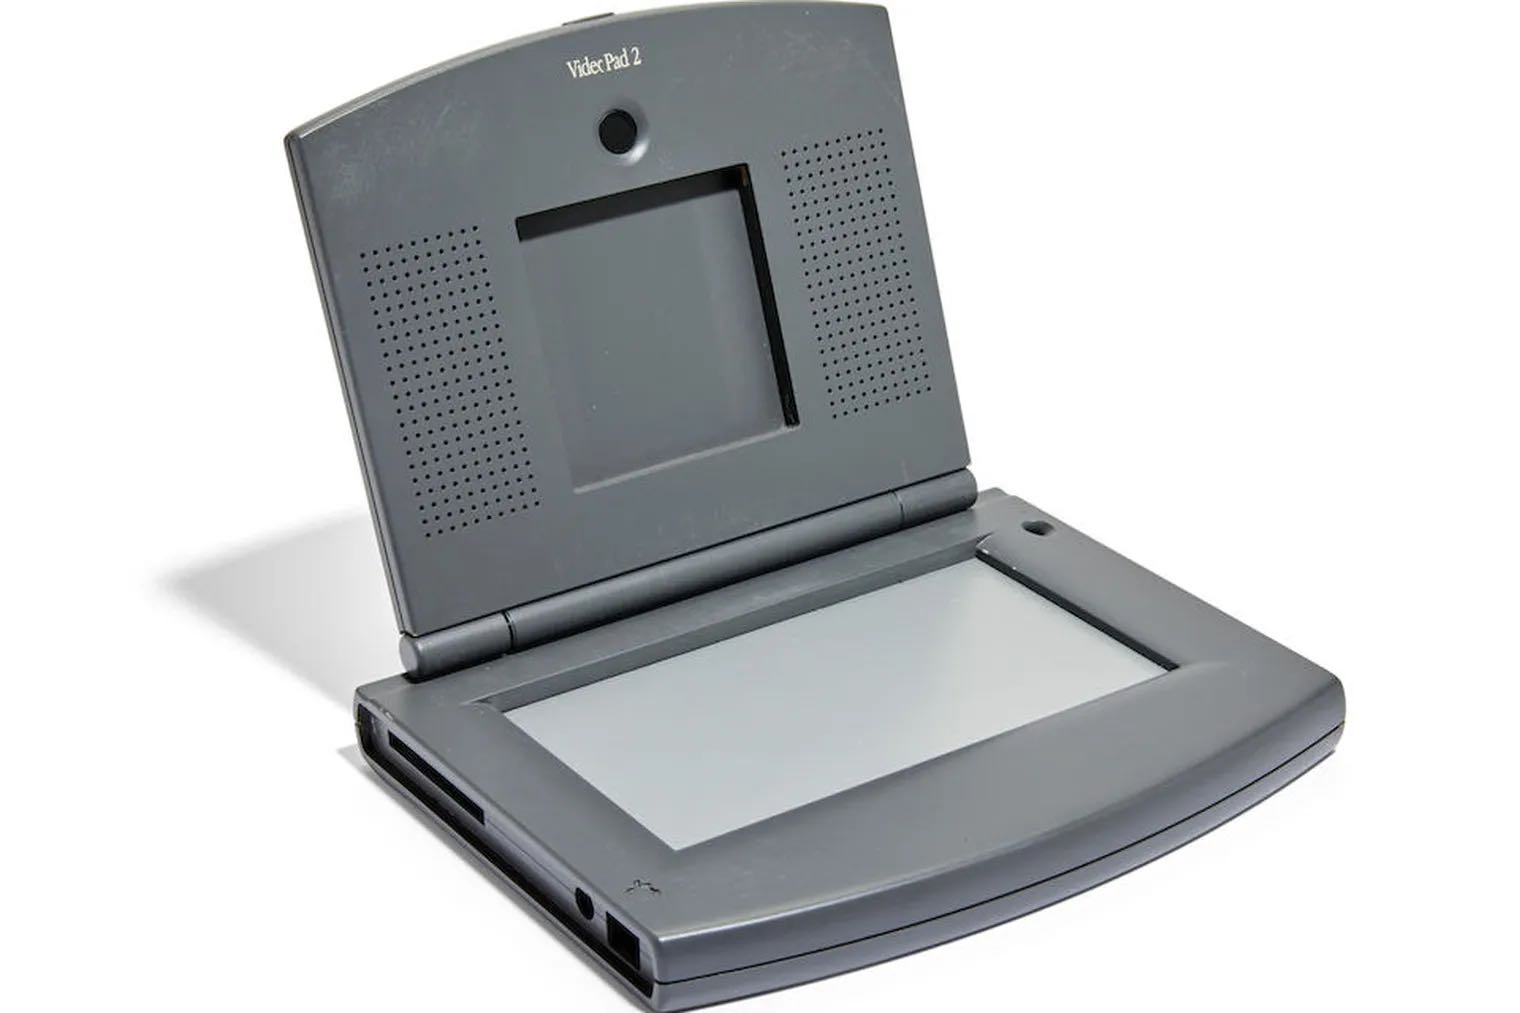 Un raro prototipo de Apple VideoPad 2 saldrá a subasta